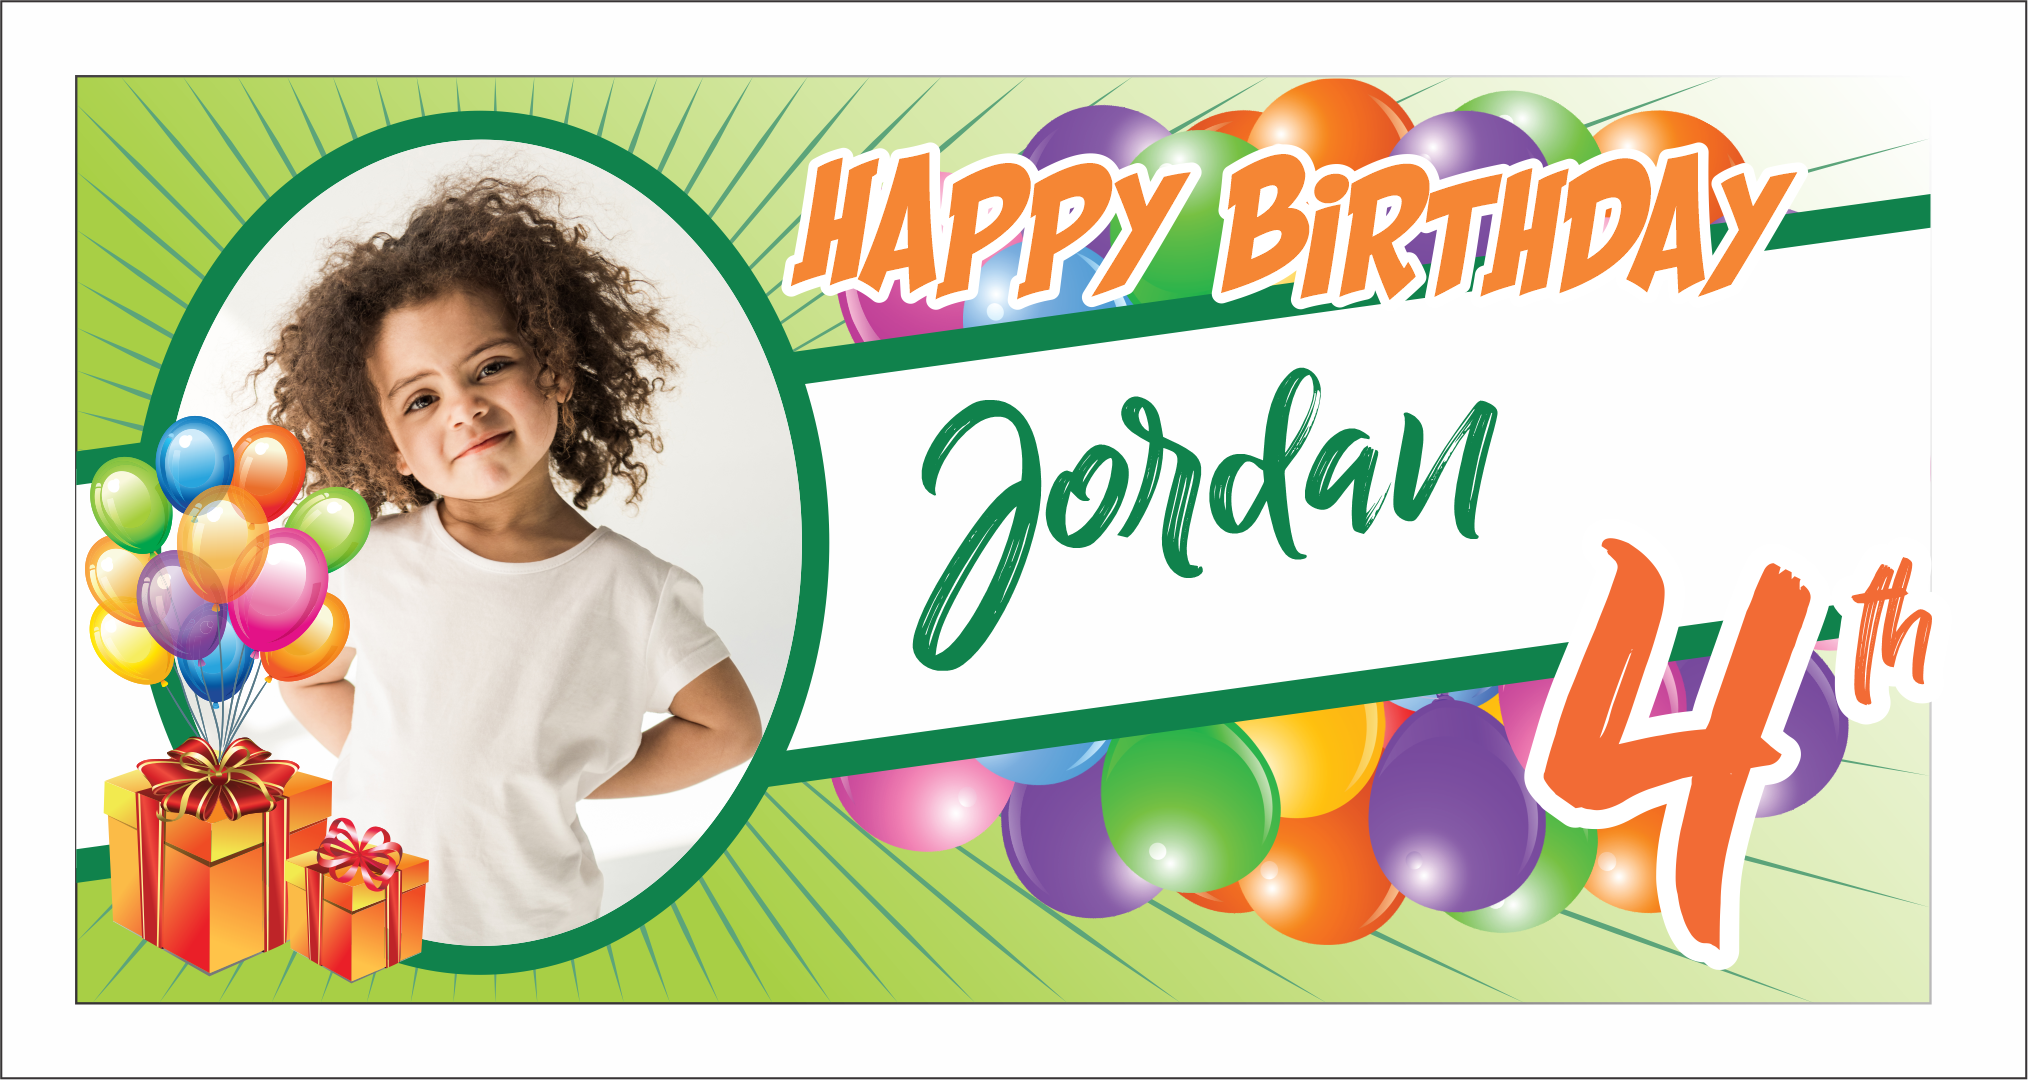 Birthday Banner - Jordan (with Photo)